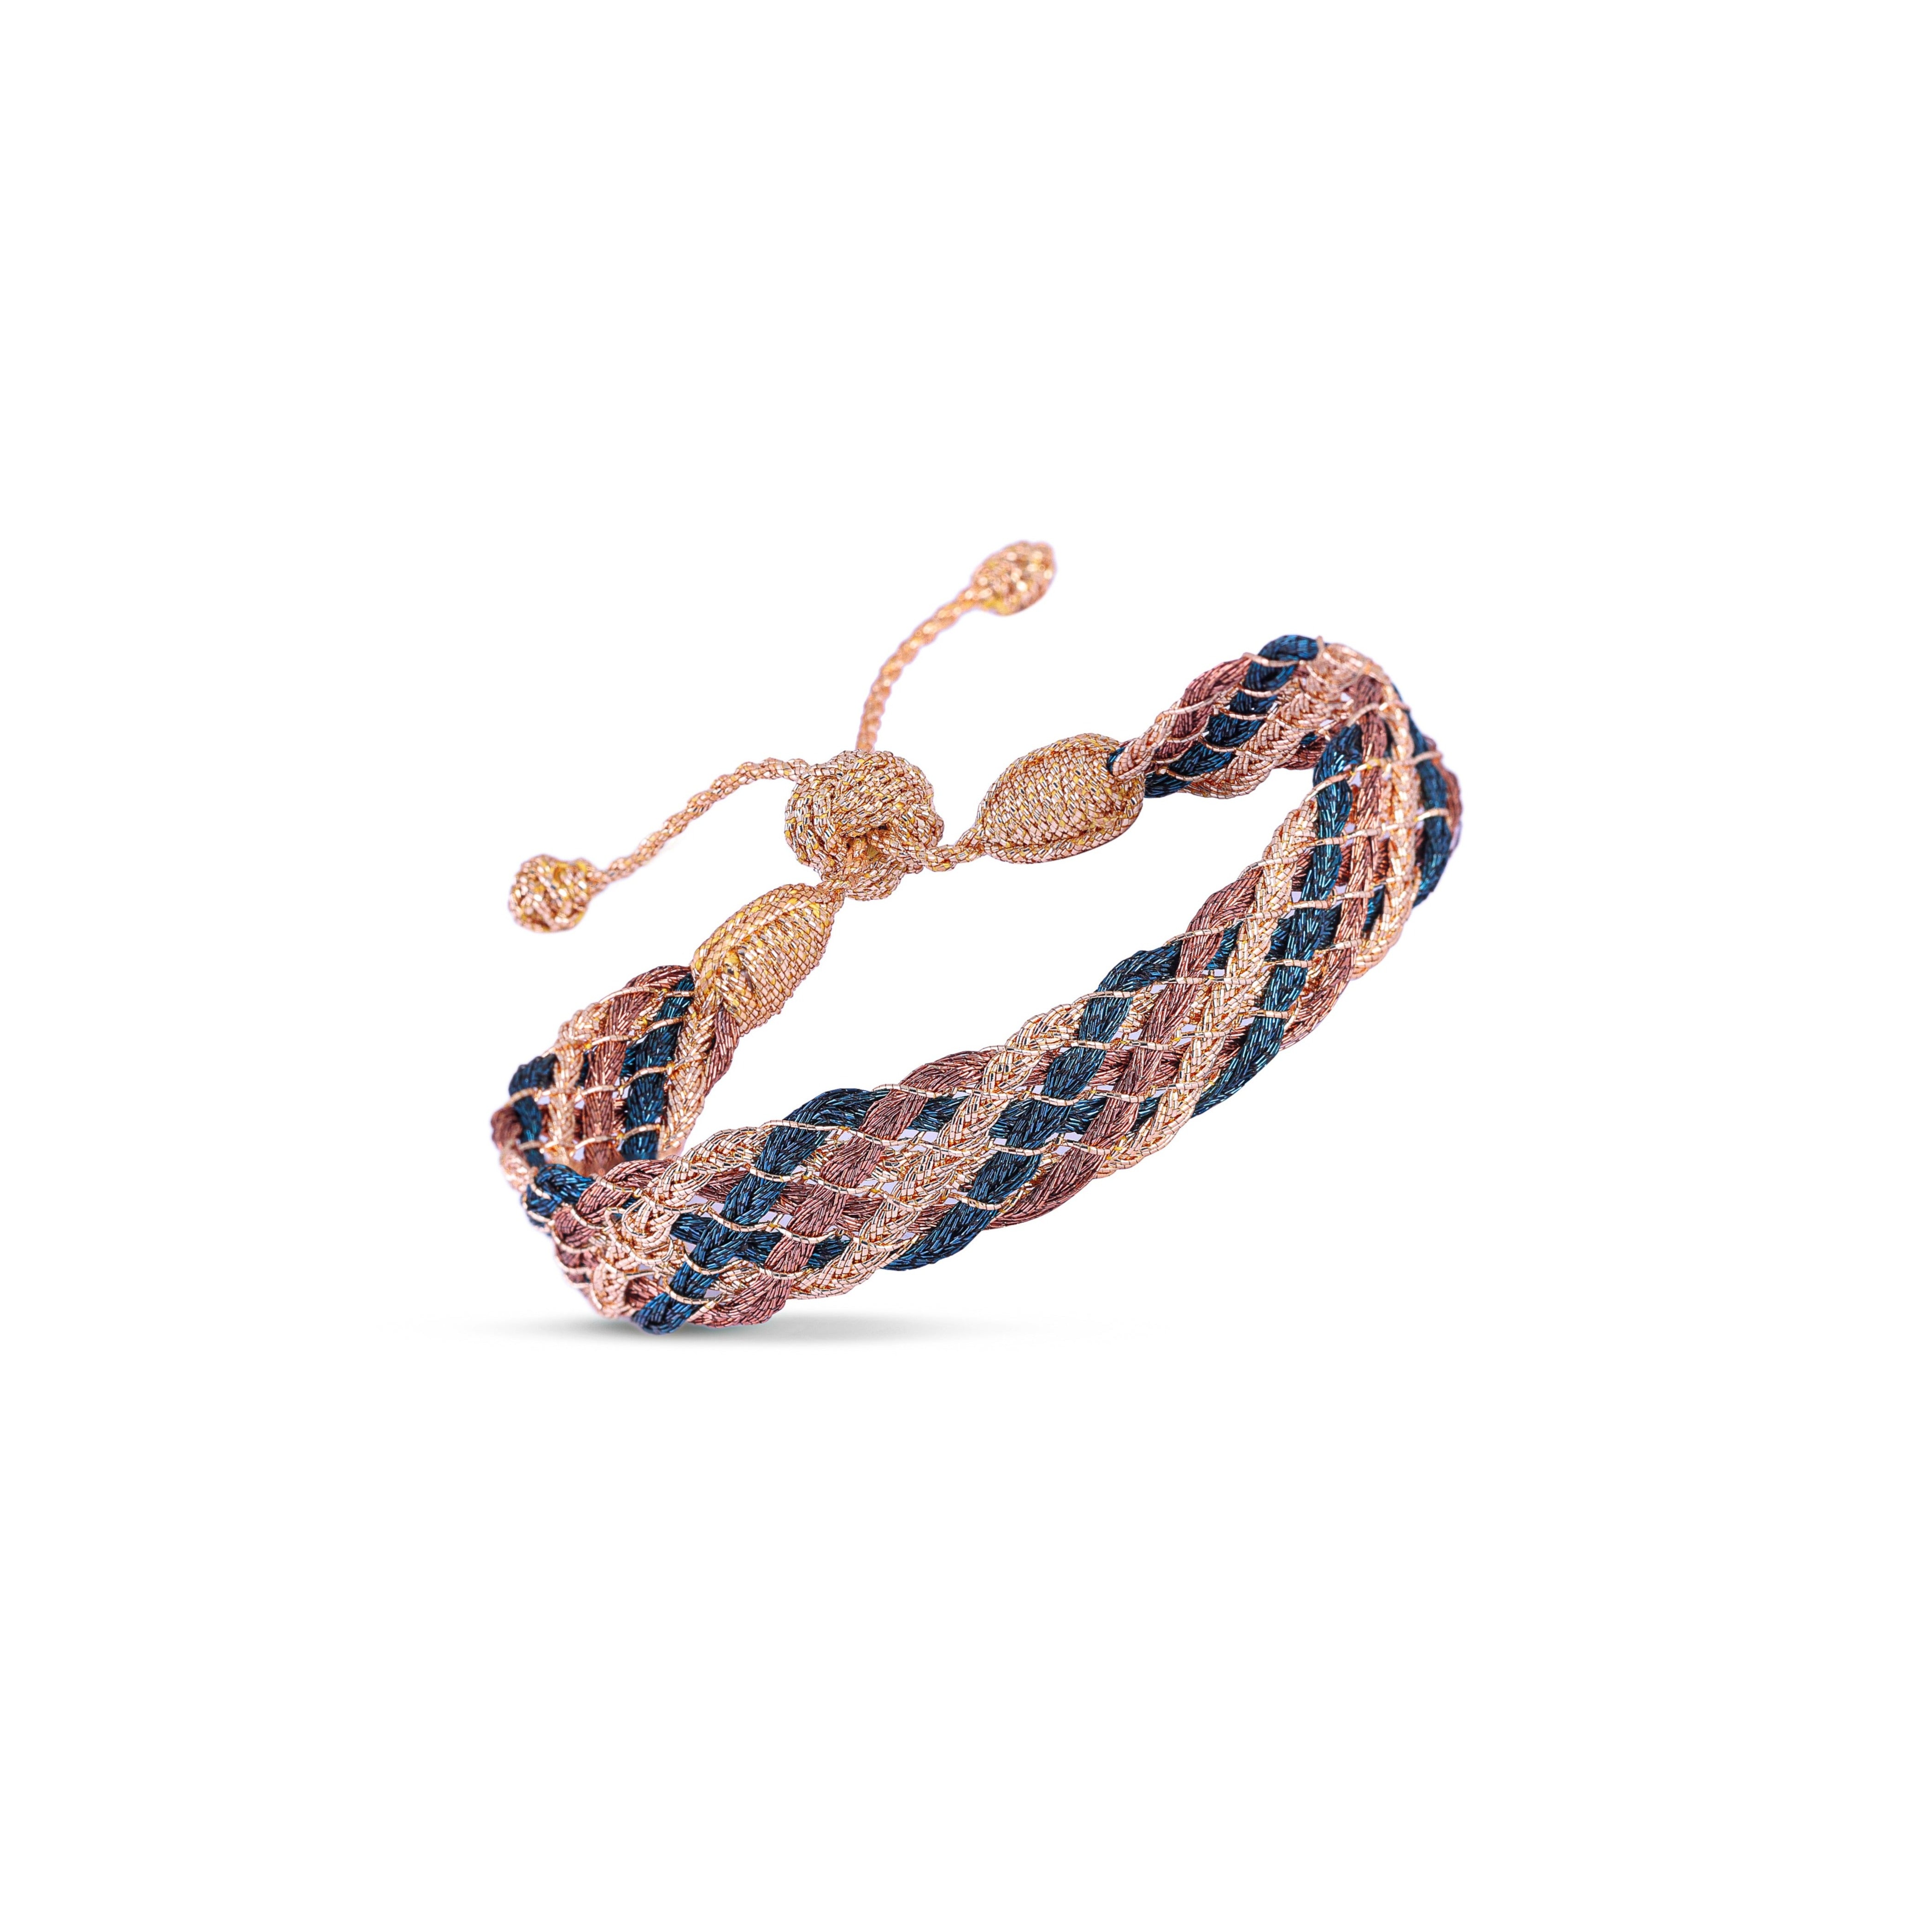 Lines n°2 bracelet in Peach Terracotta